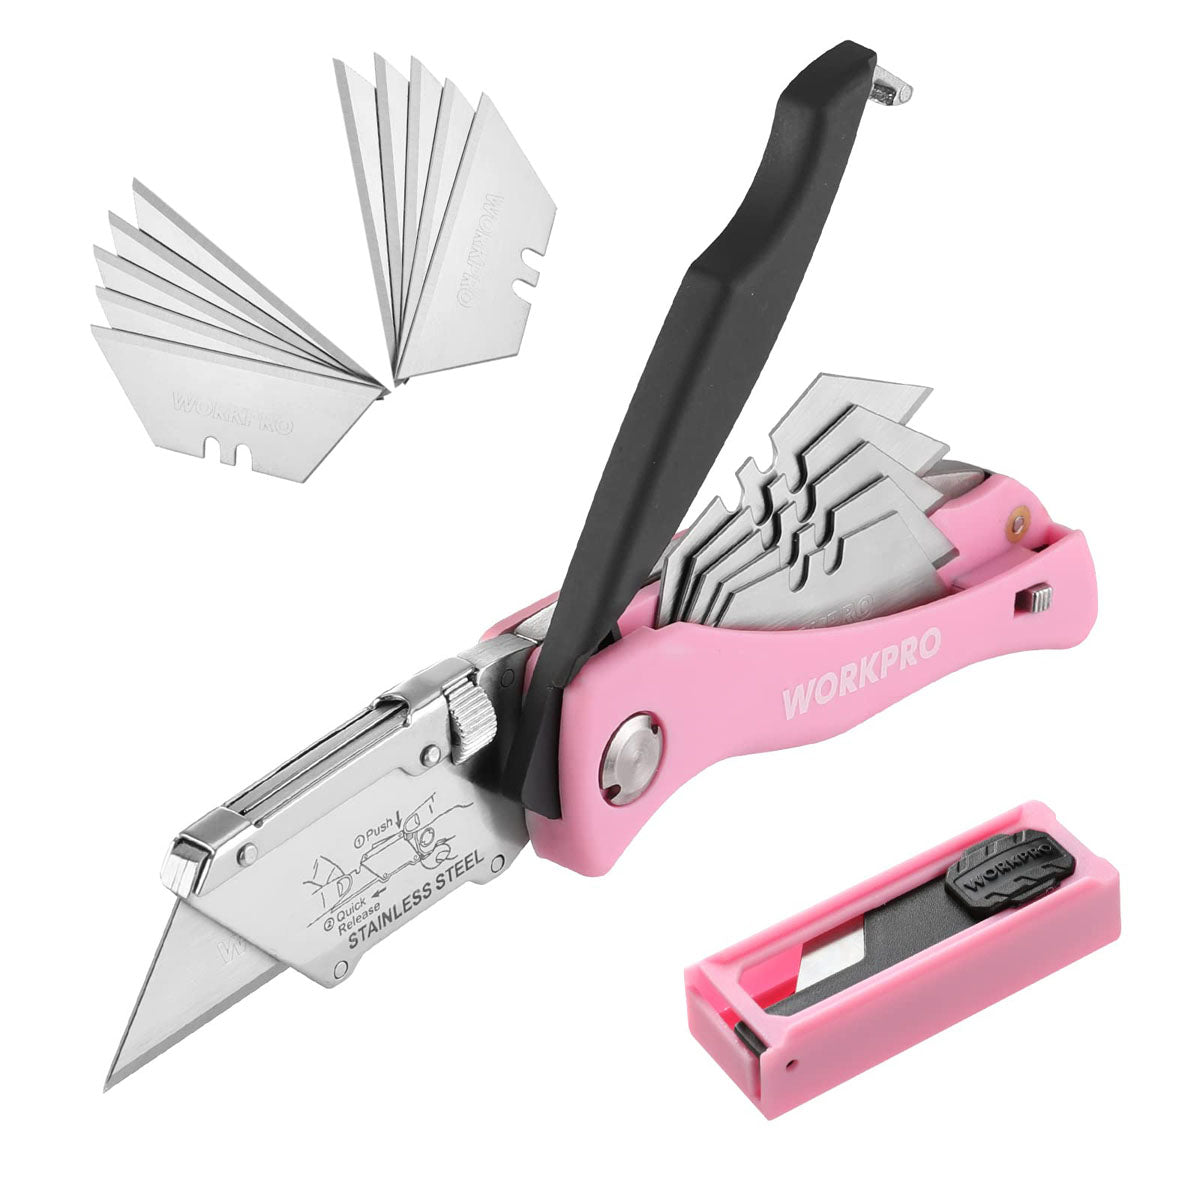 WORKPRO Folding Utility Knife, Quick Change Box Cutter, Pink Razor Kn